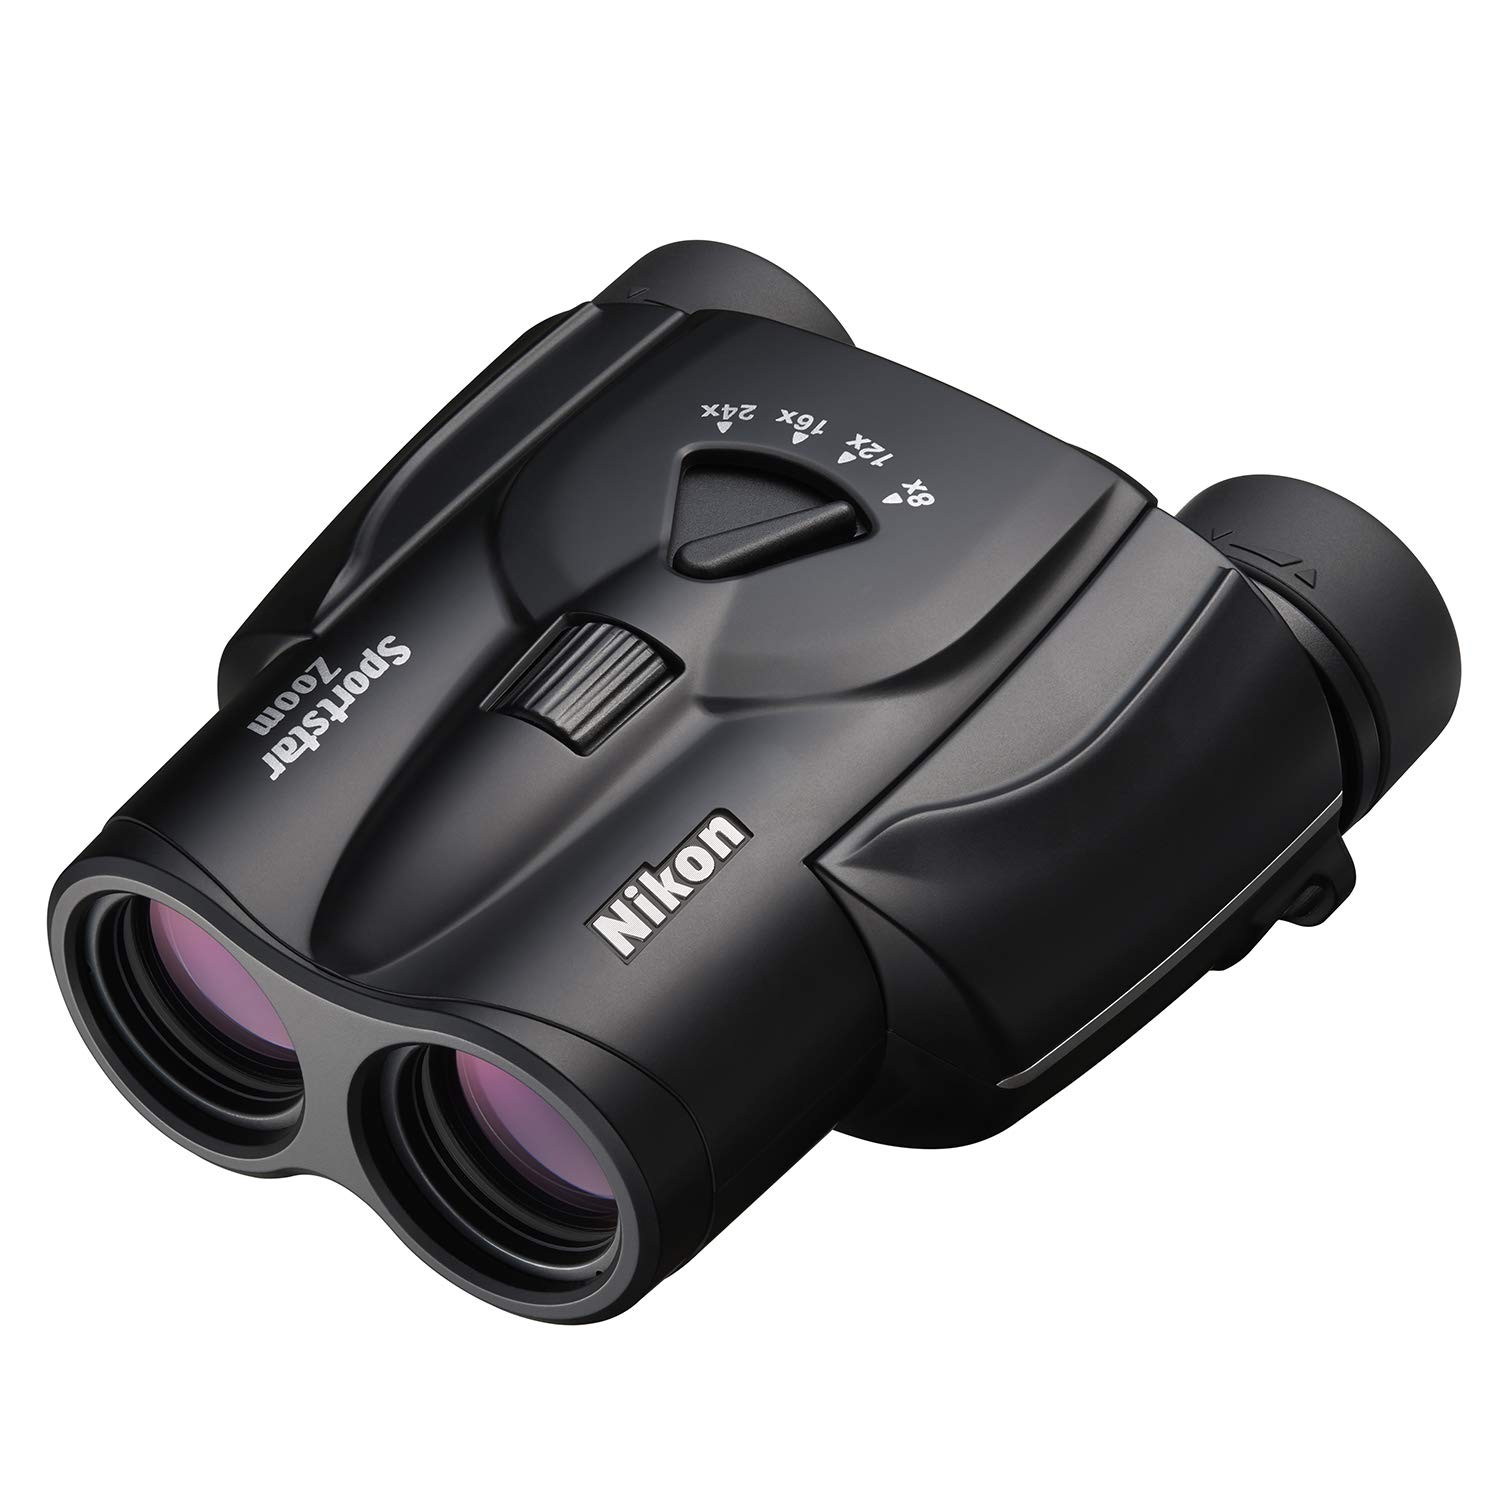 ［Nikon］双眼鏡 Sportstar Zoom 8-24X25 ブラック